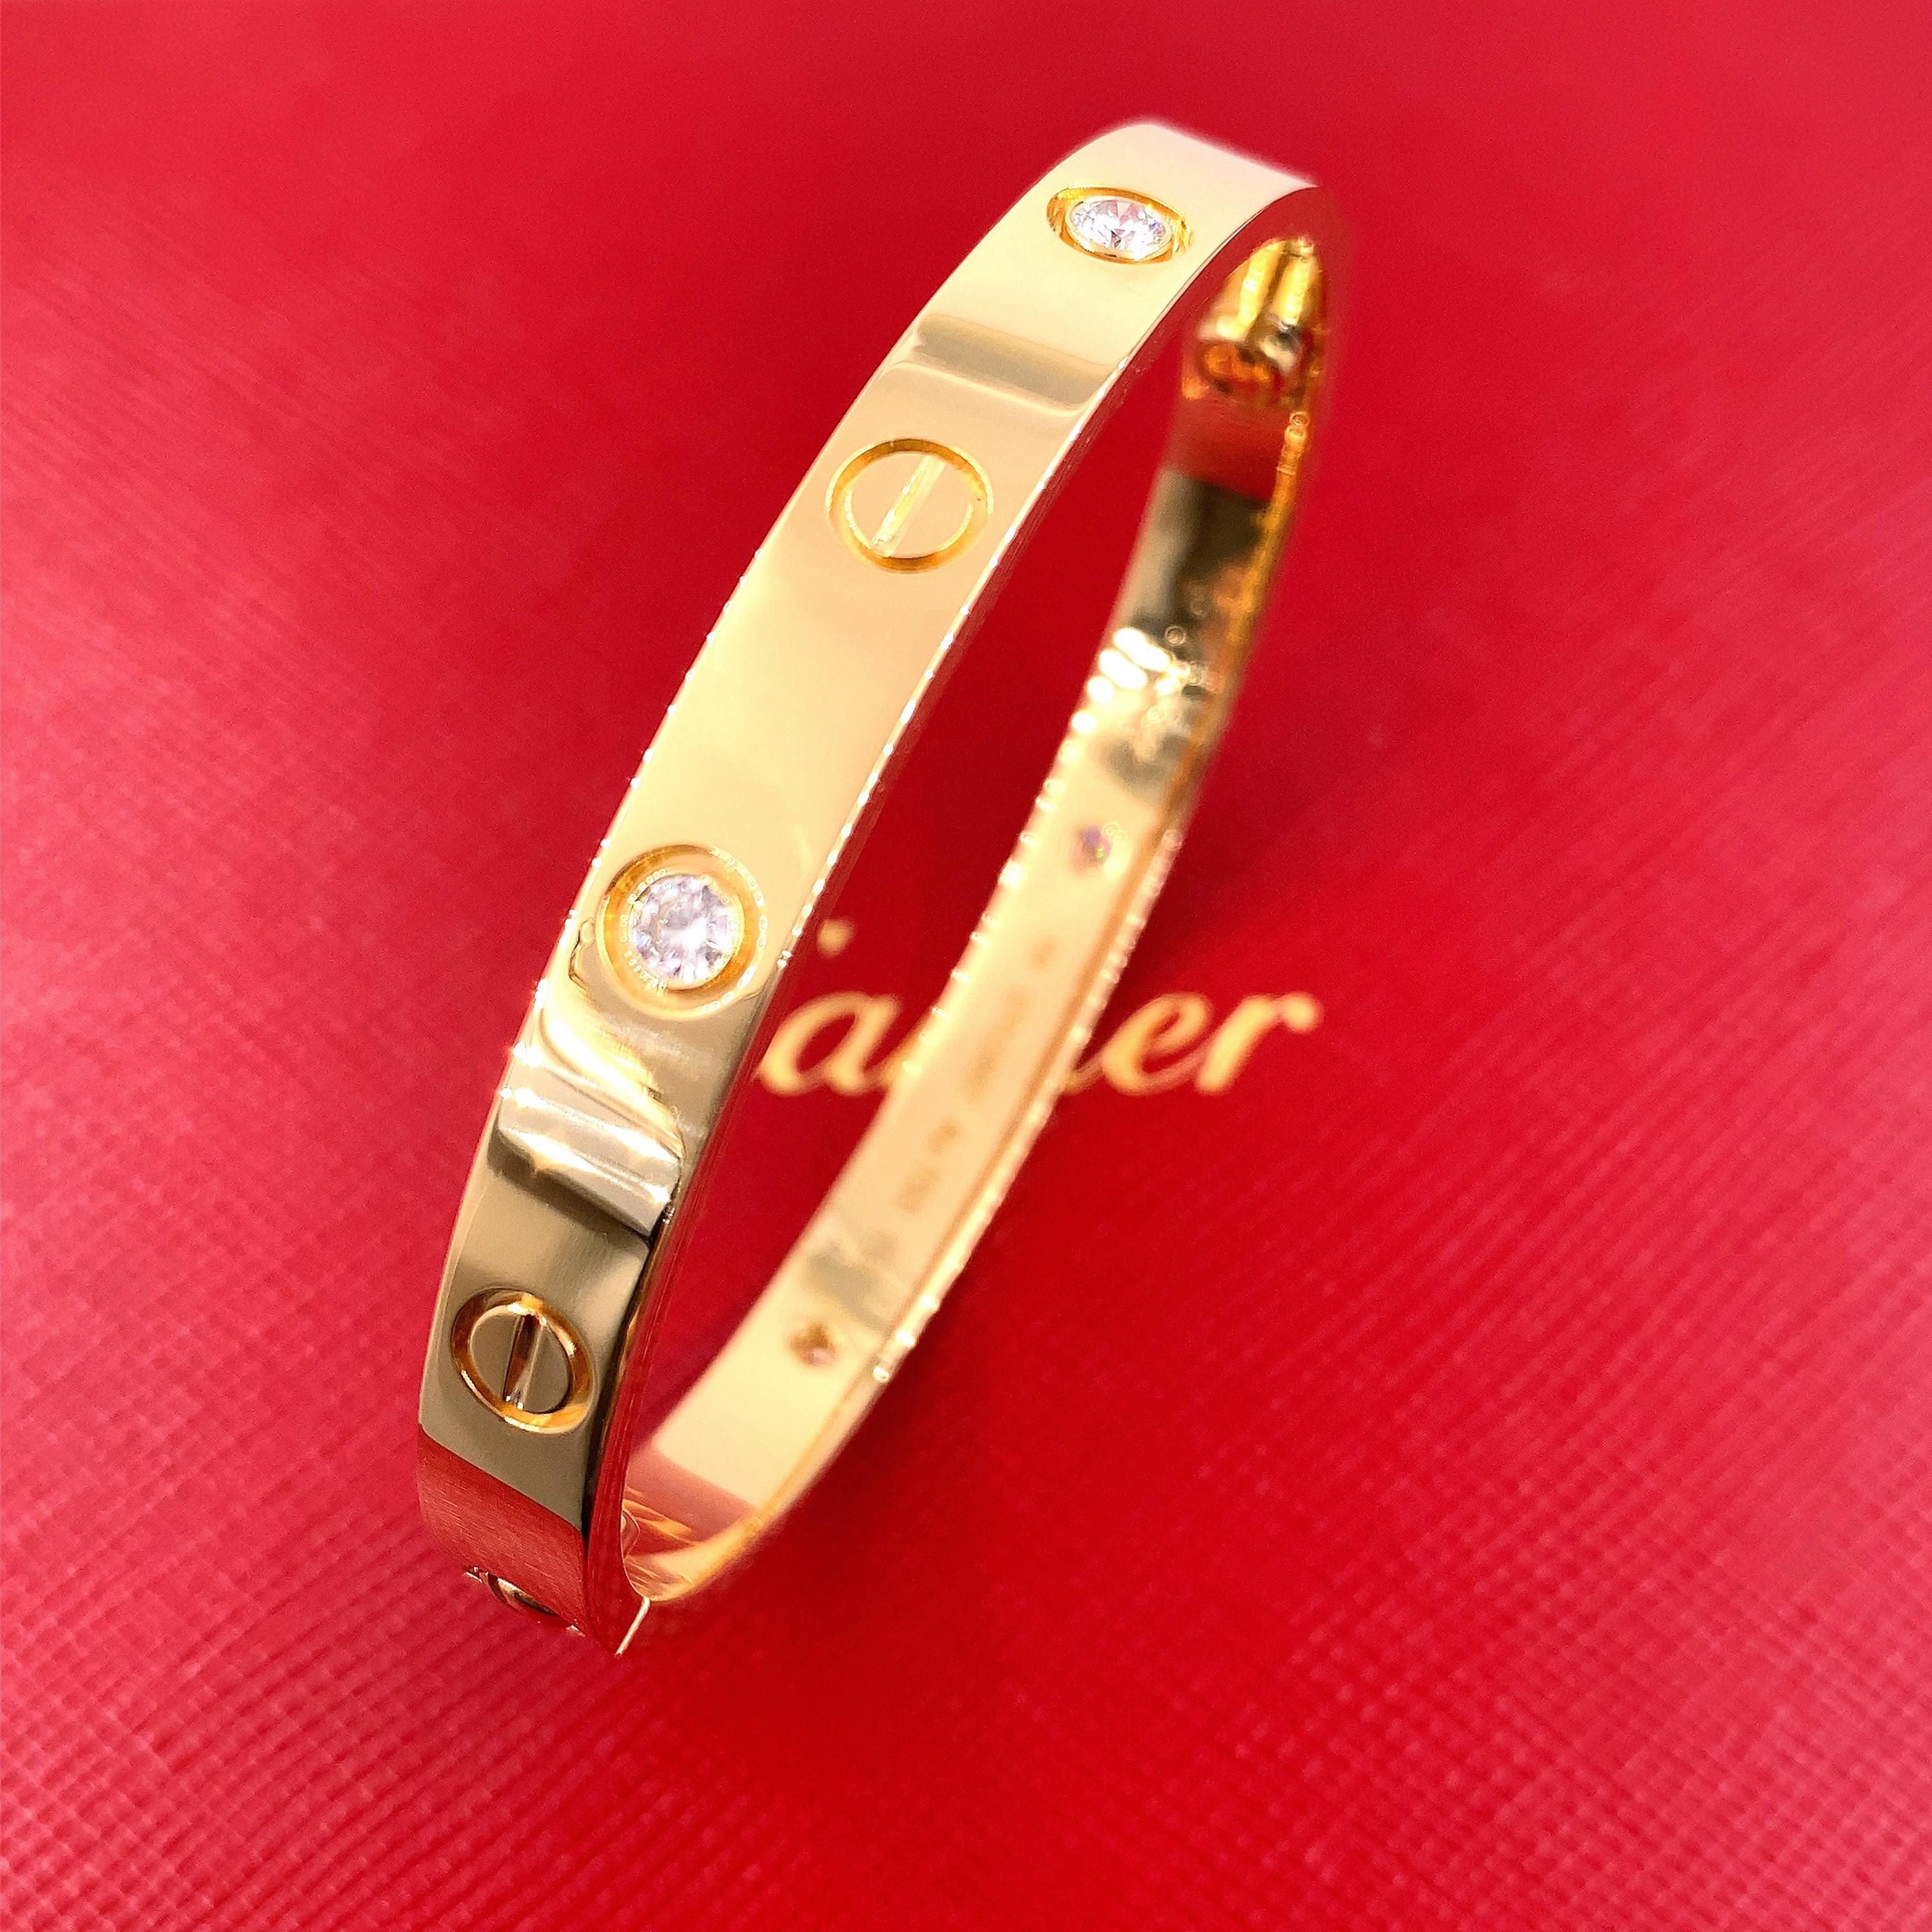 Cartier 4 Diamond Love Bangle Bracelet with Box 18kt Yellow Gold SZ 16 For Sale 4